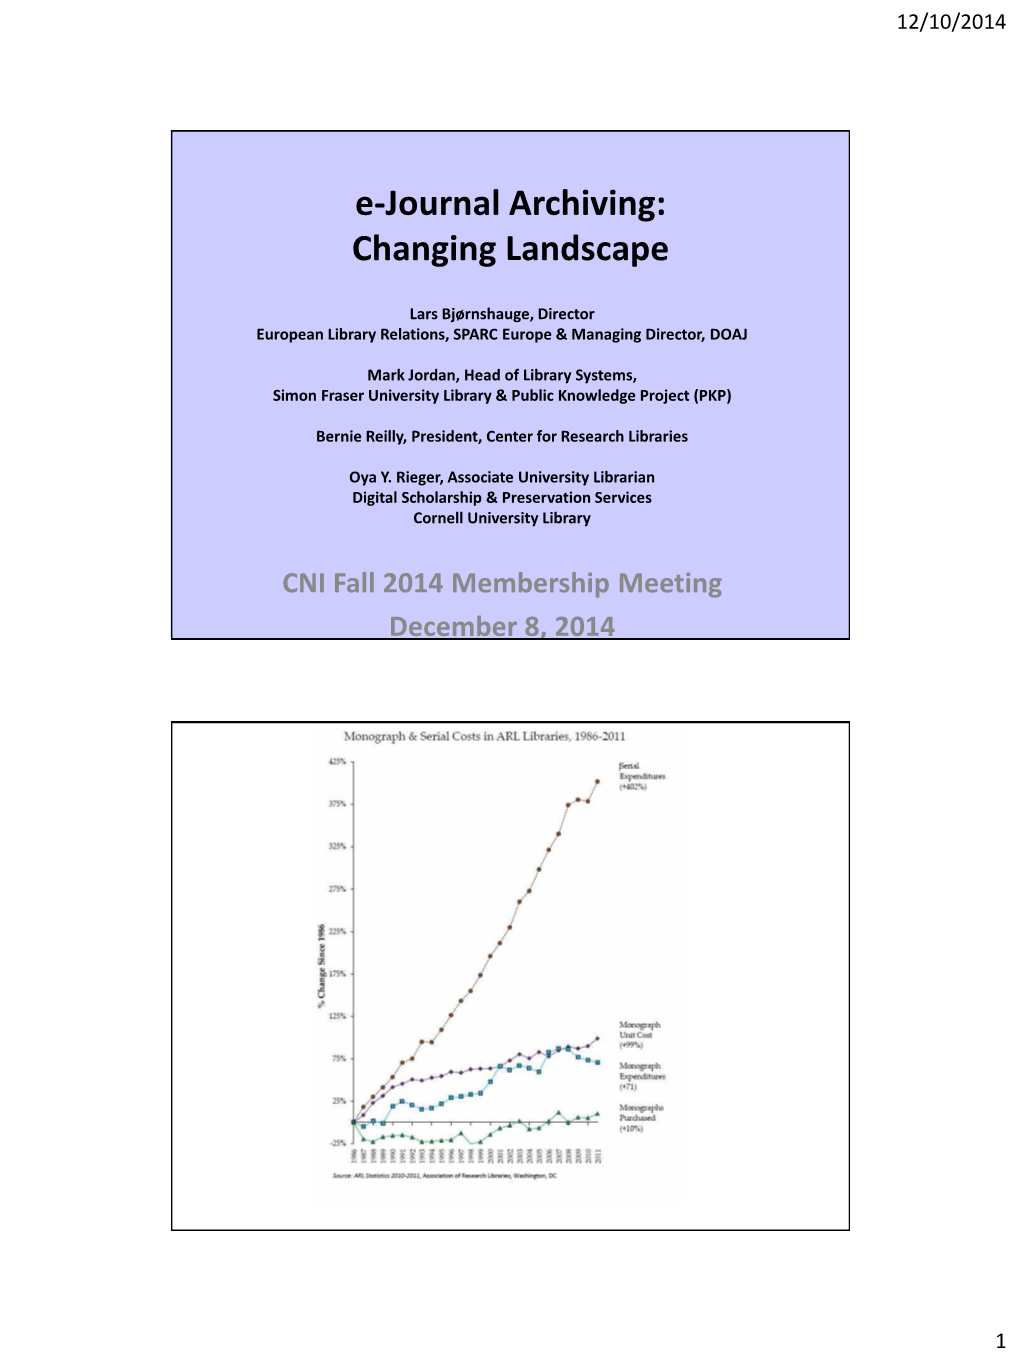 E-Journal Archiving: Changing Landscape